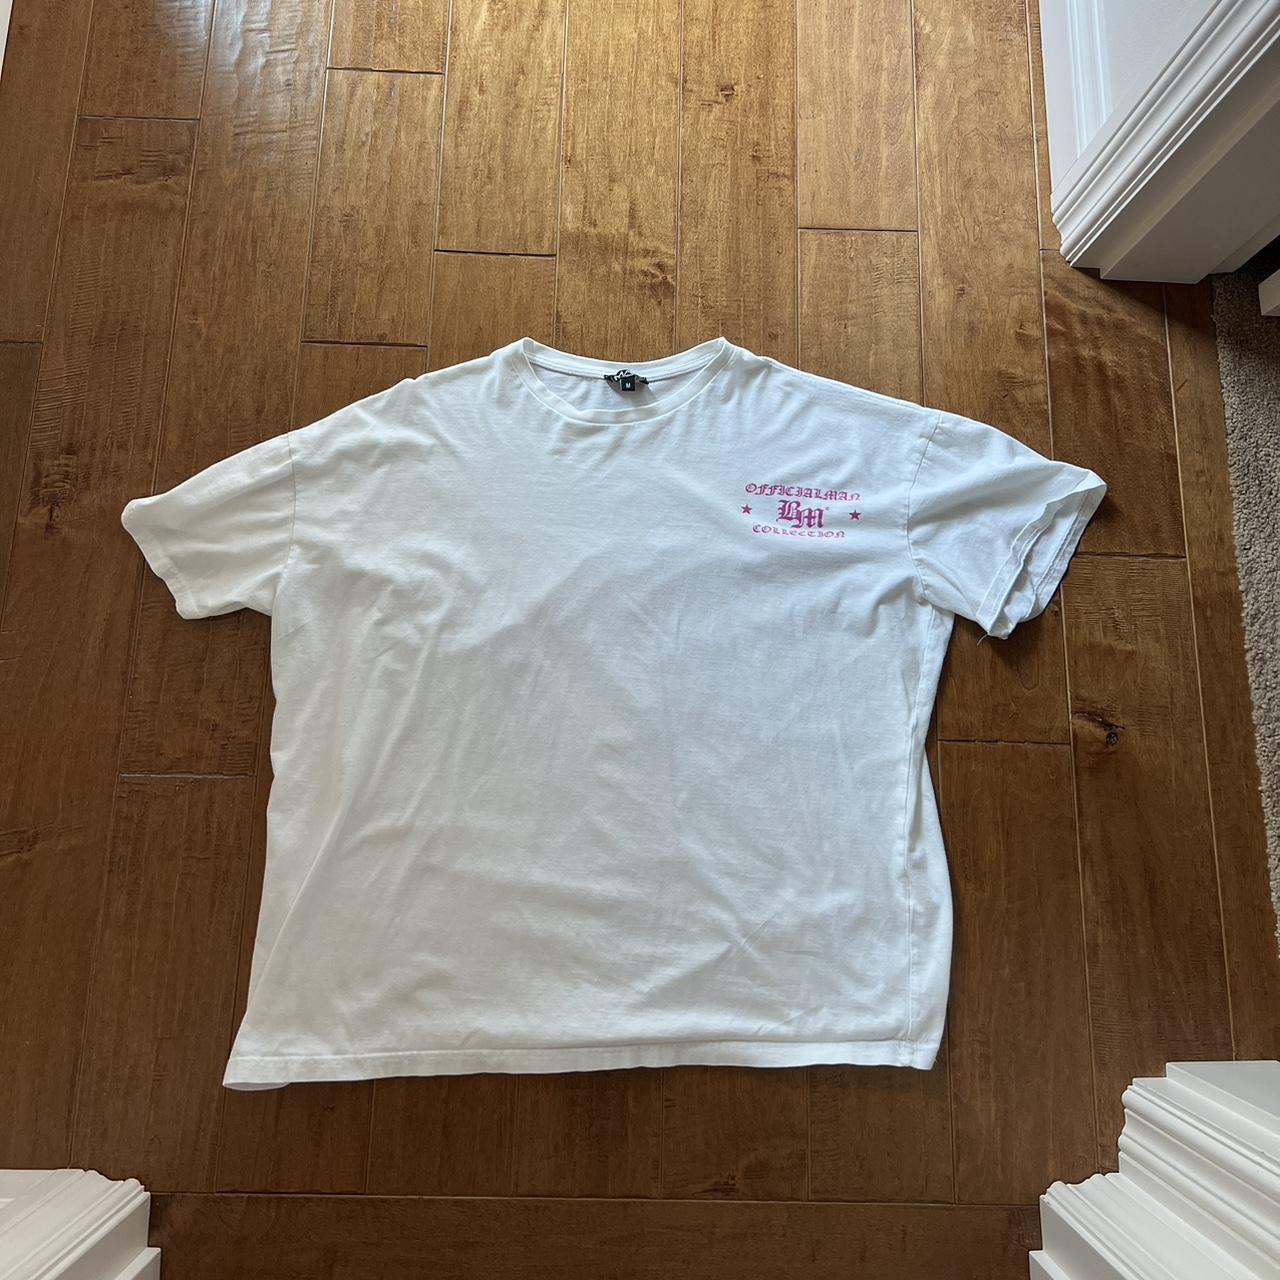 Boohoo Men's White and Pink T-shirt